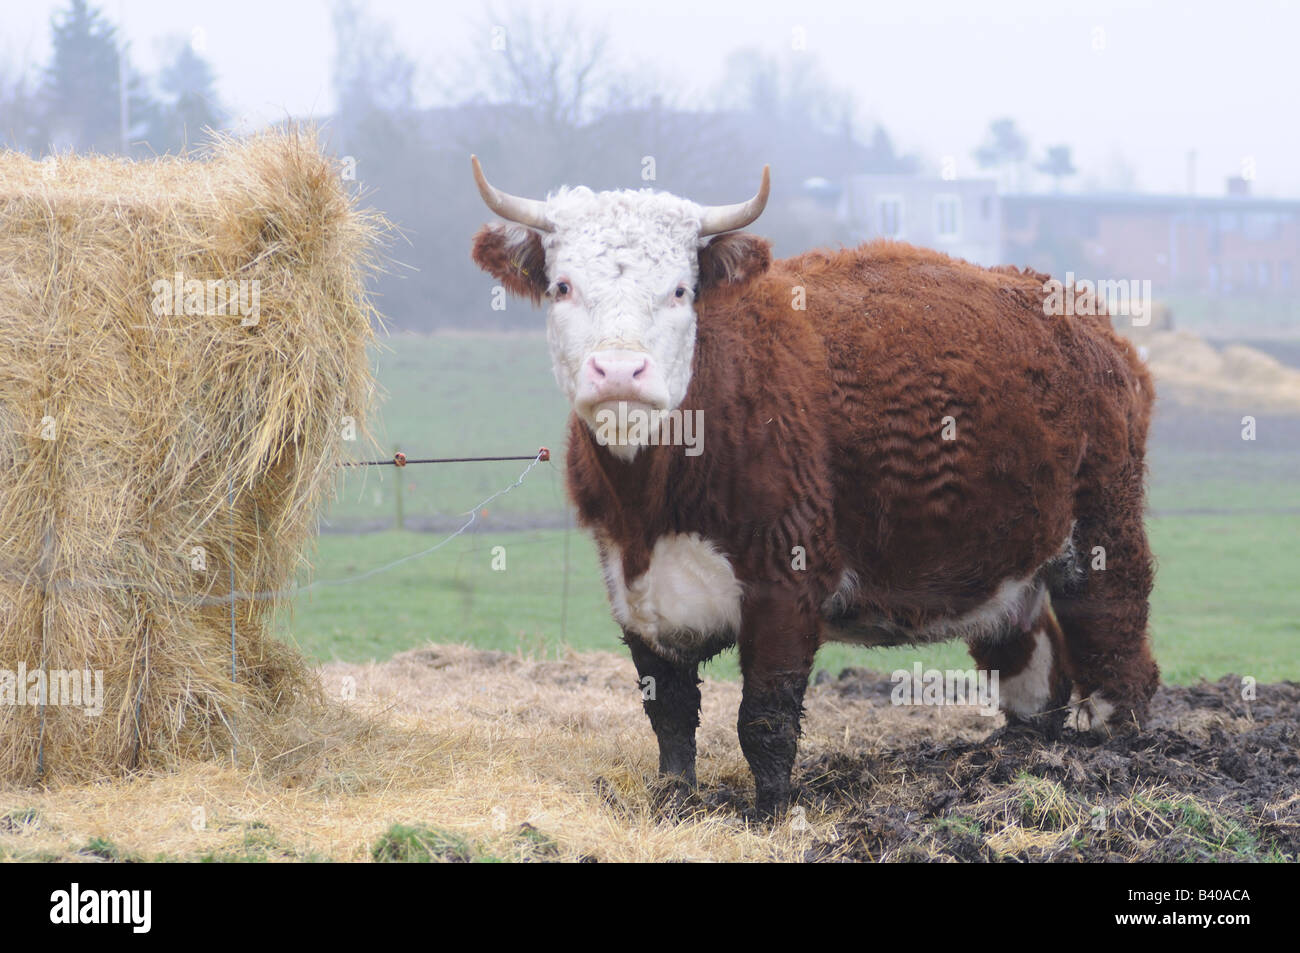 cattle Stock Photo